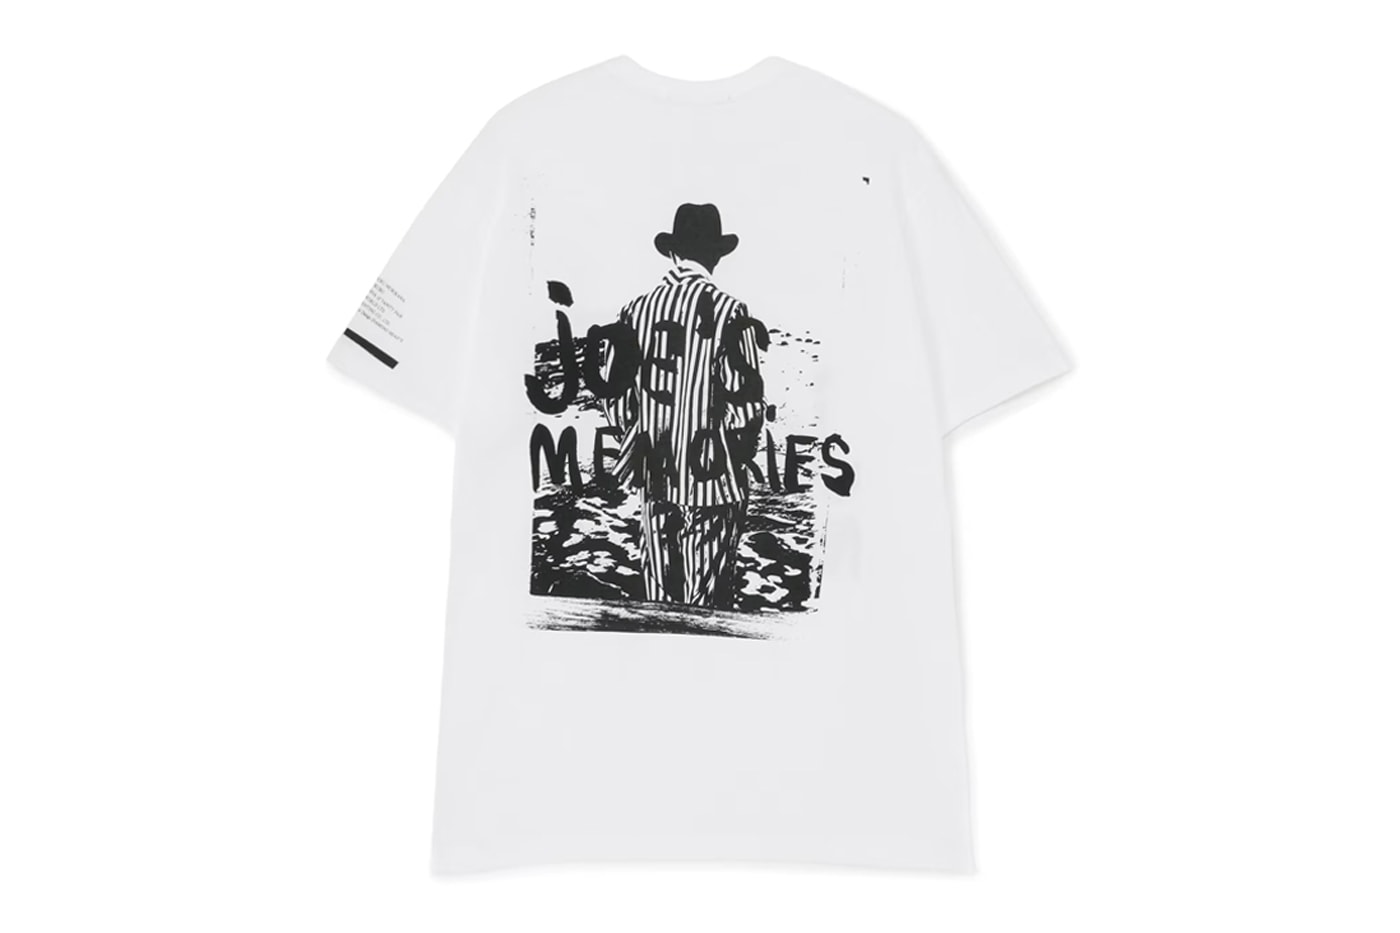 WILDSIDE Yohji Yamamoto M/M (PARIS) Atsushi Okubo T-Shirt Collaboration Info